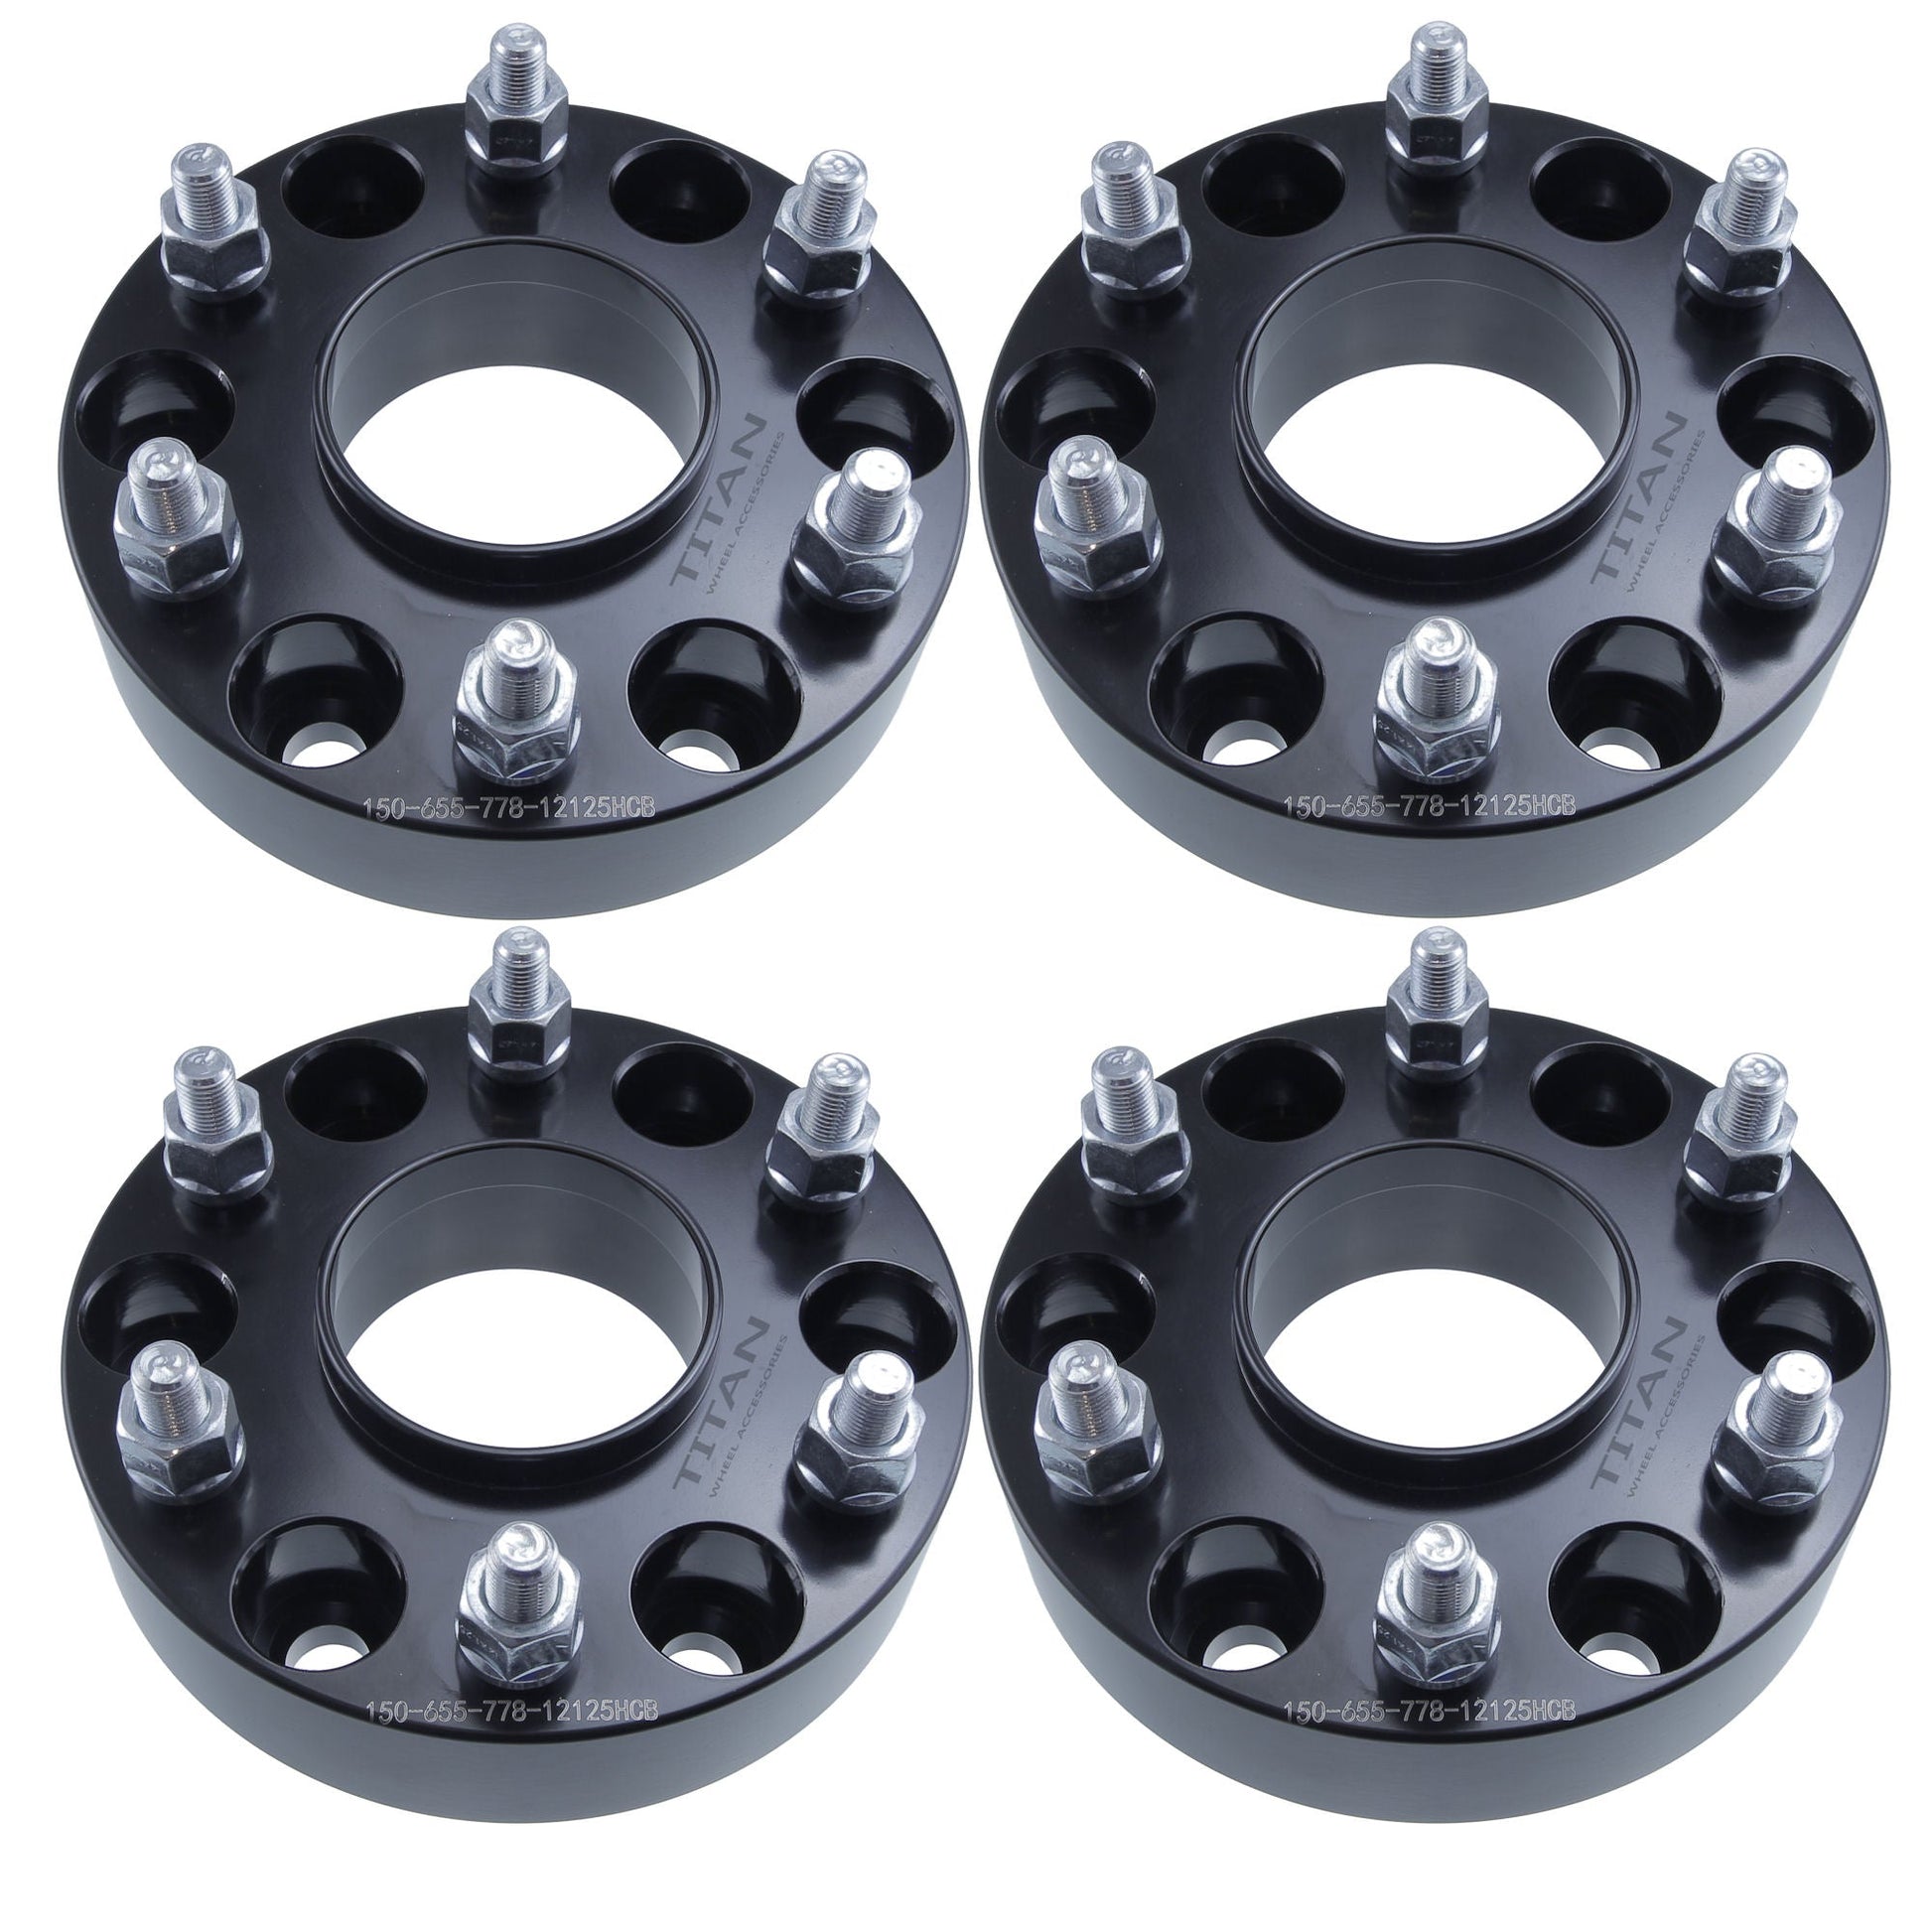 38mm (1.5") Titan Wheel Spacers for Infiniti WX80 Nissan Titan XD Ram 1500 | 6x5.5 (6x139.7) | 77.8 Hubcentric |14x1.5 Studs | Set of 4 | Titan Wheel Accessories